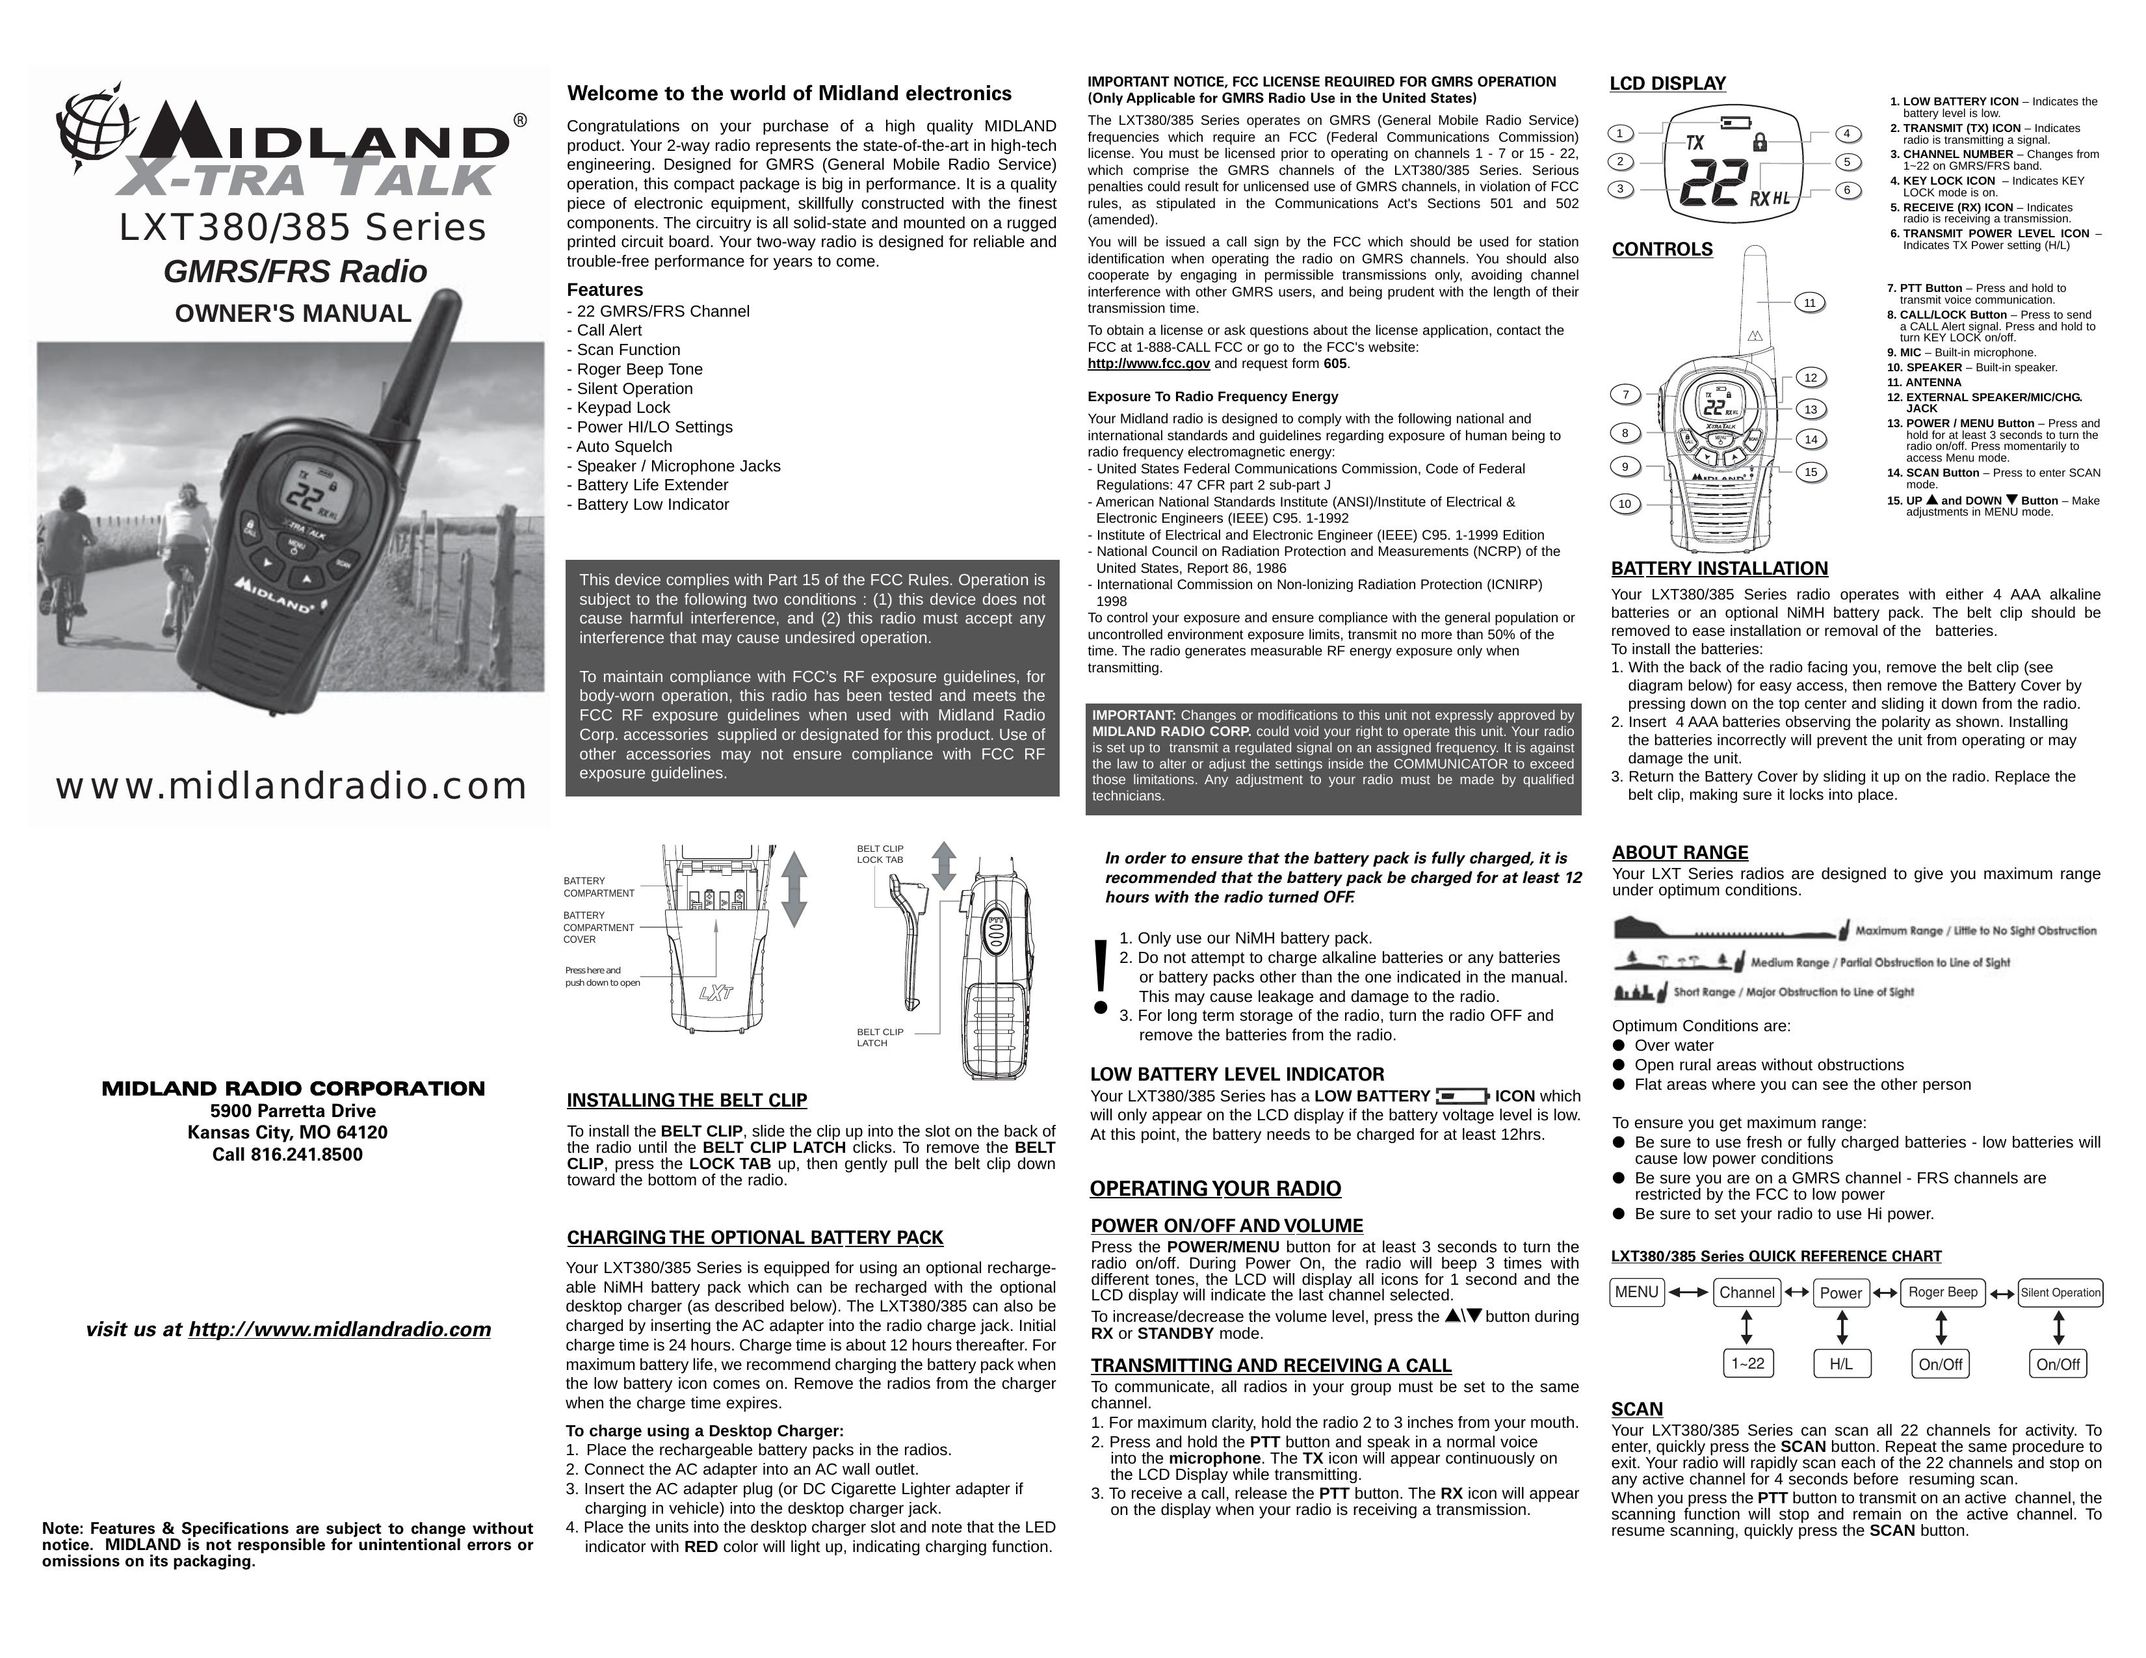 Midland Radio LXT385 Car Satellite Radio System User Manual